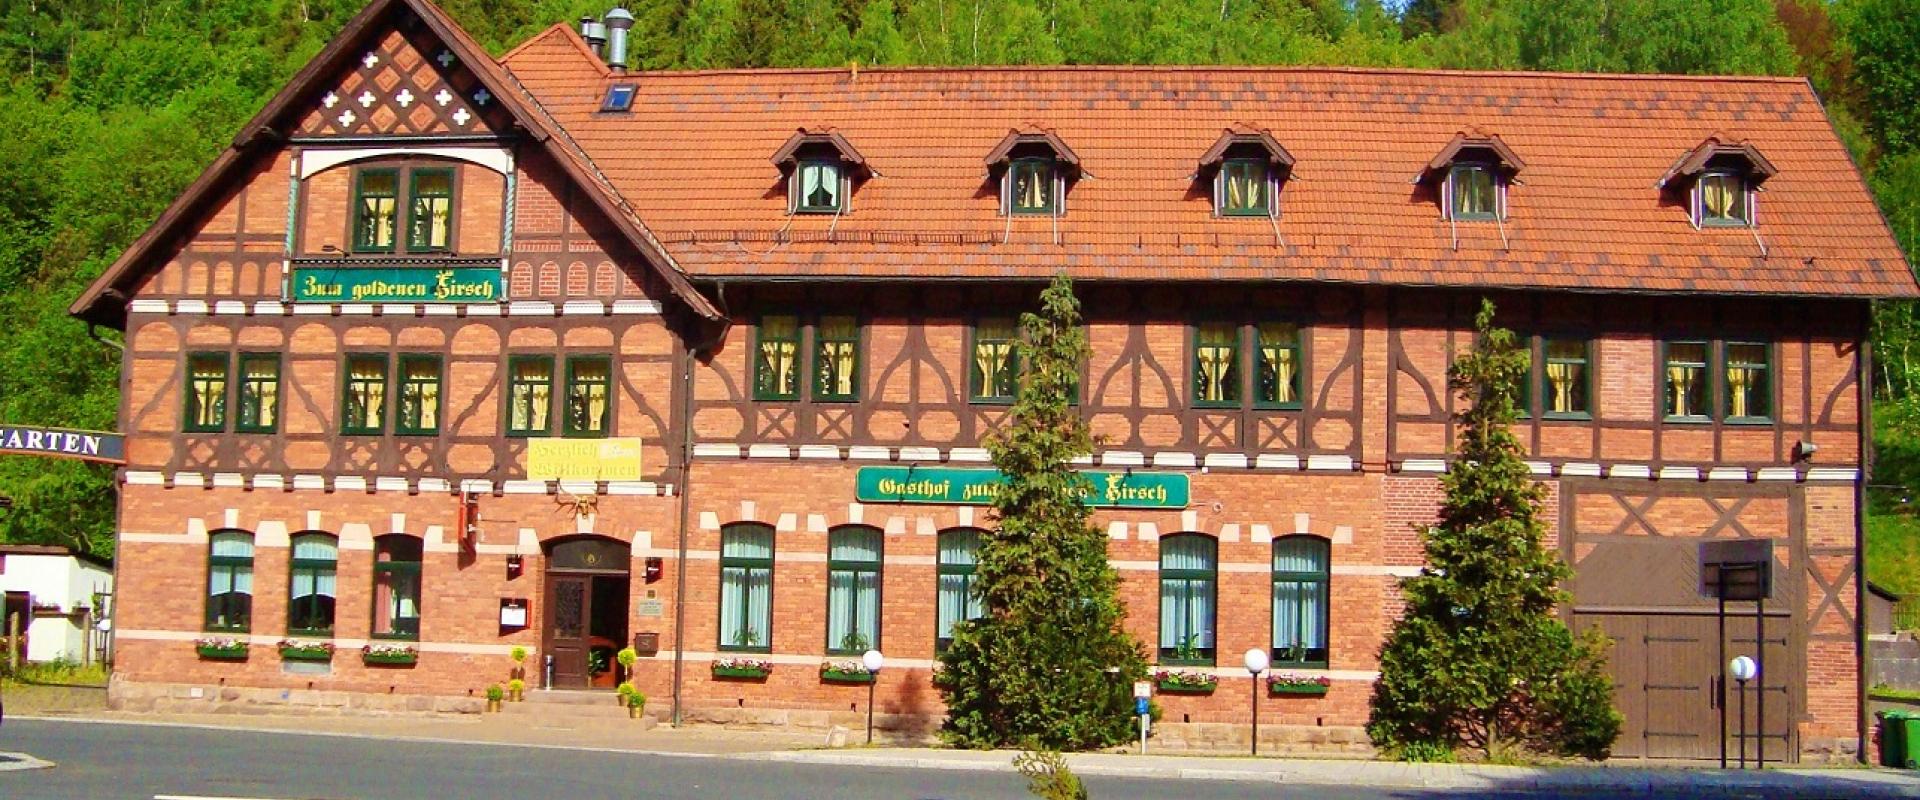 15858 Biker Hotel Zum Goldenen Hirsch in Thüringen/Thüringer Wald.jpg